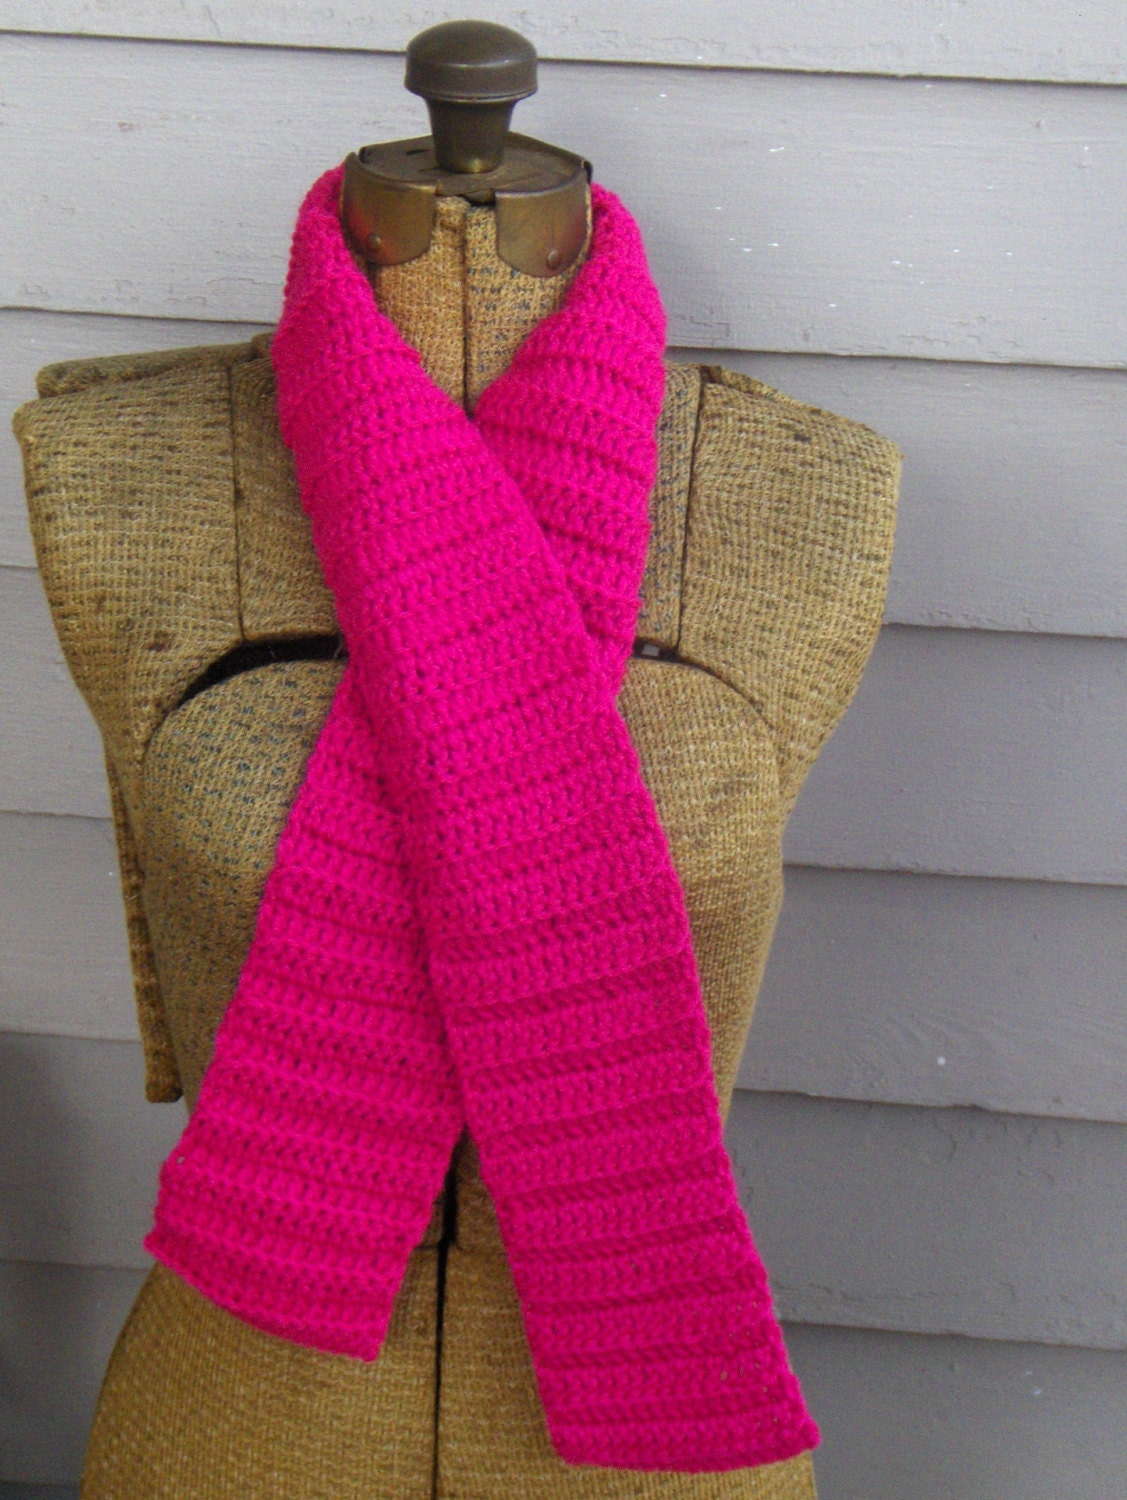 The Shocking Pink Scarf. Handmade Crochet Boho Gyspy Rustic - Etsy